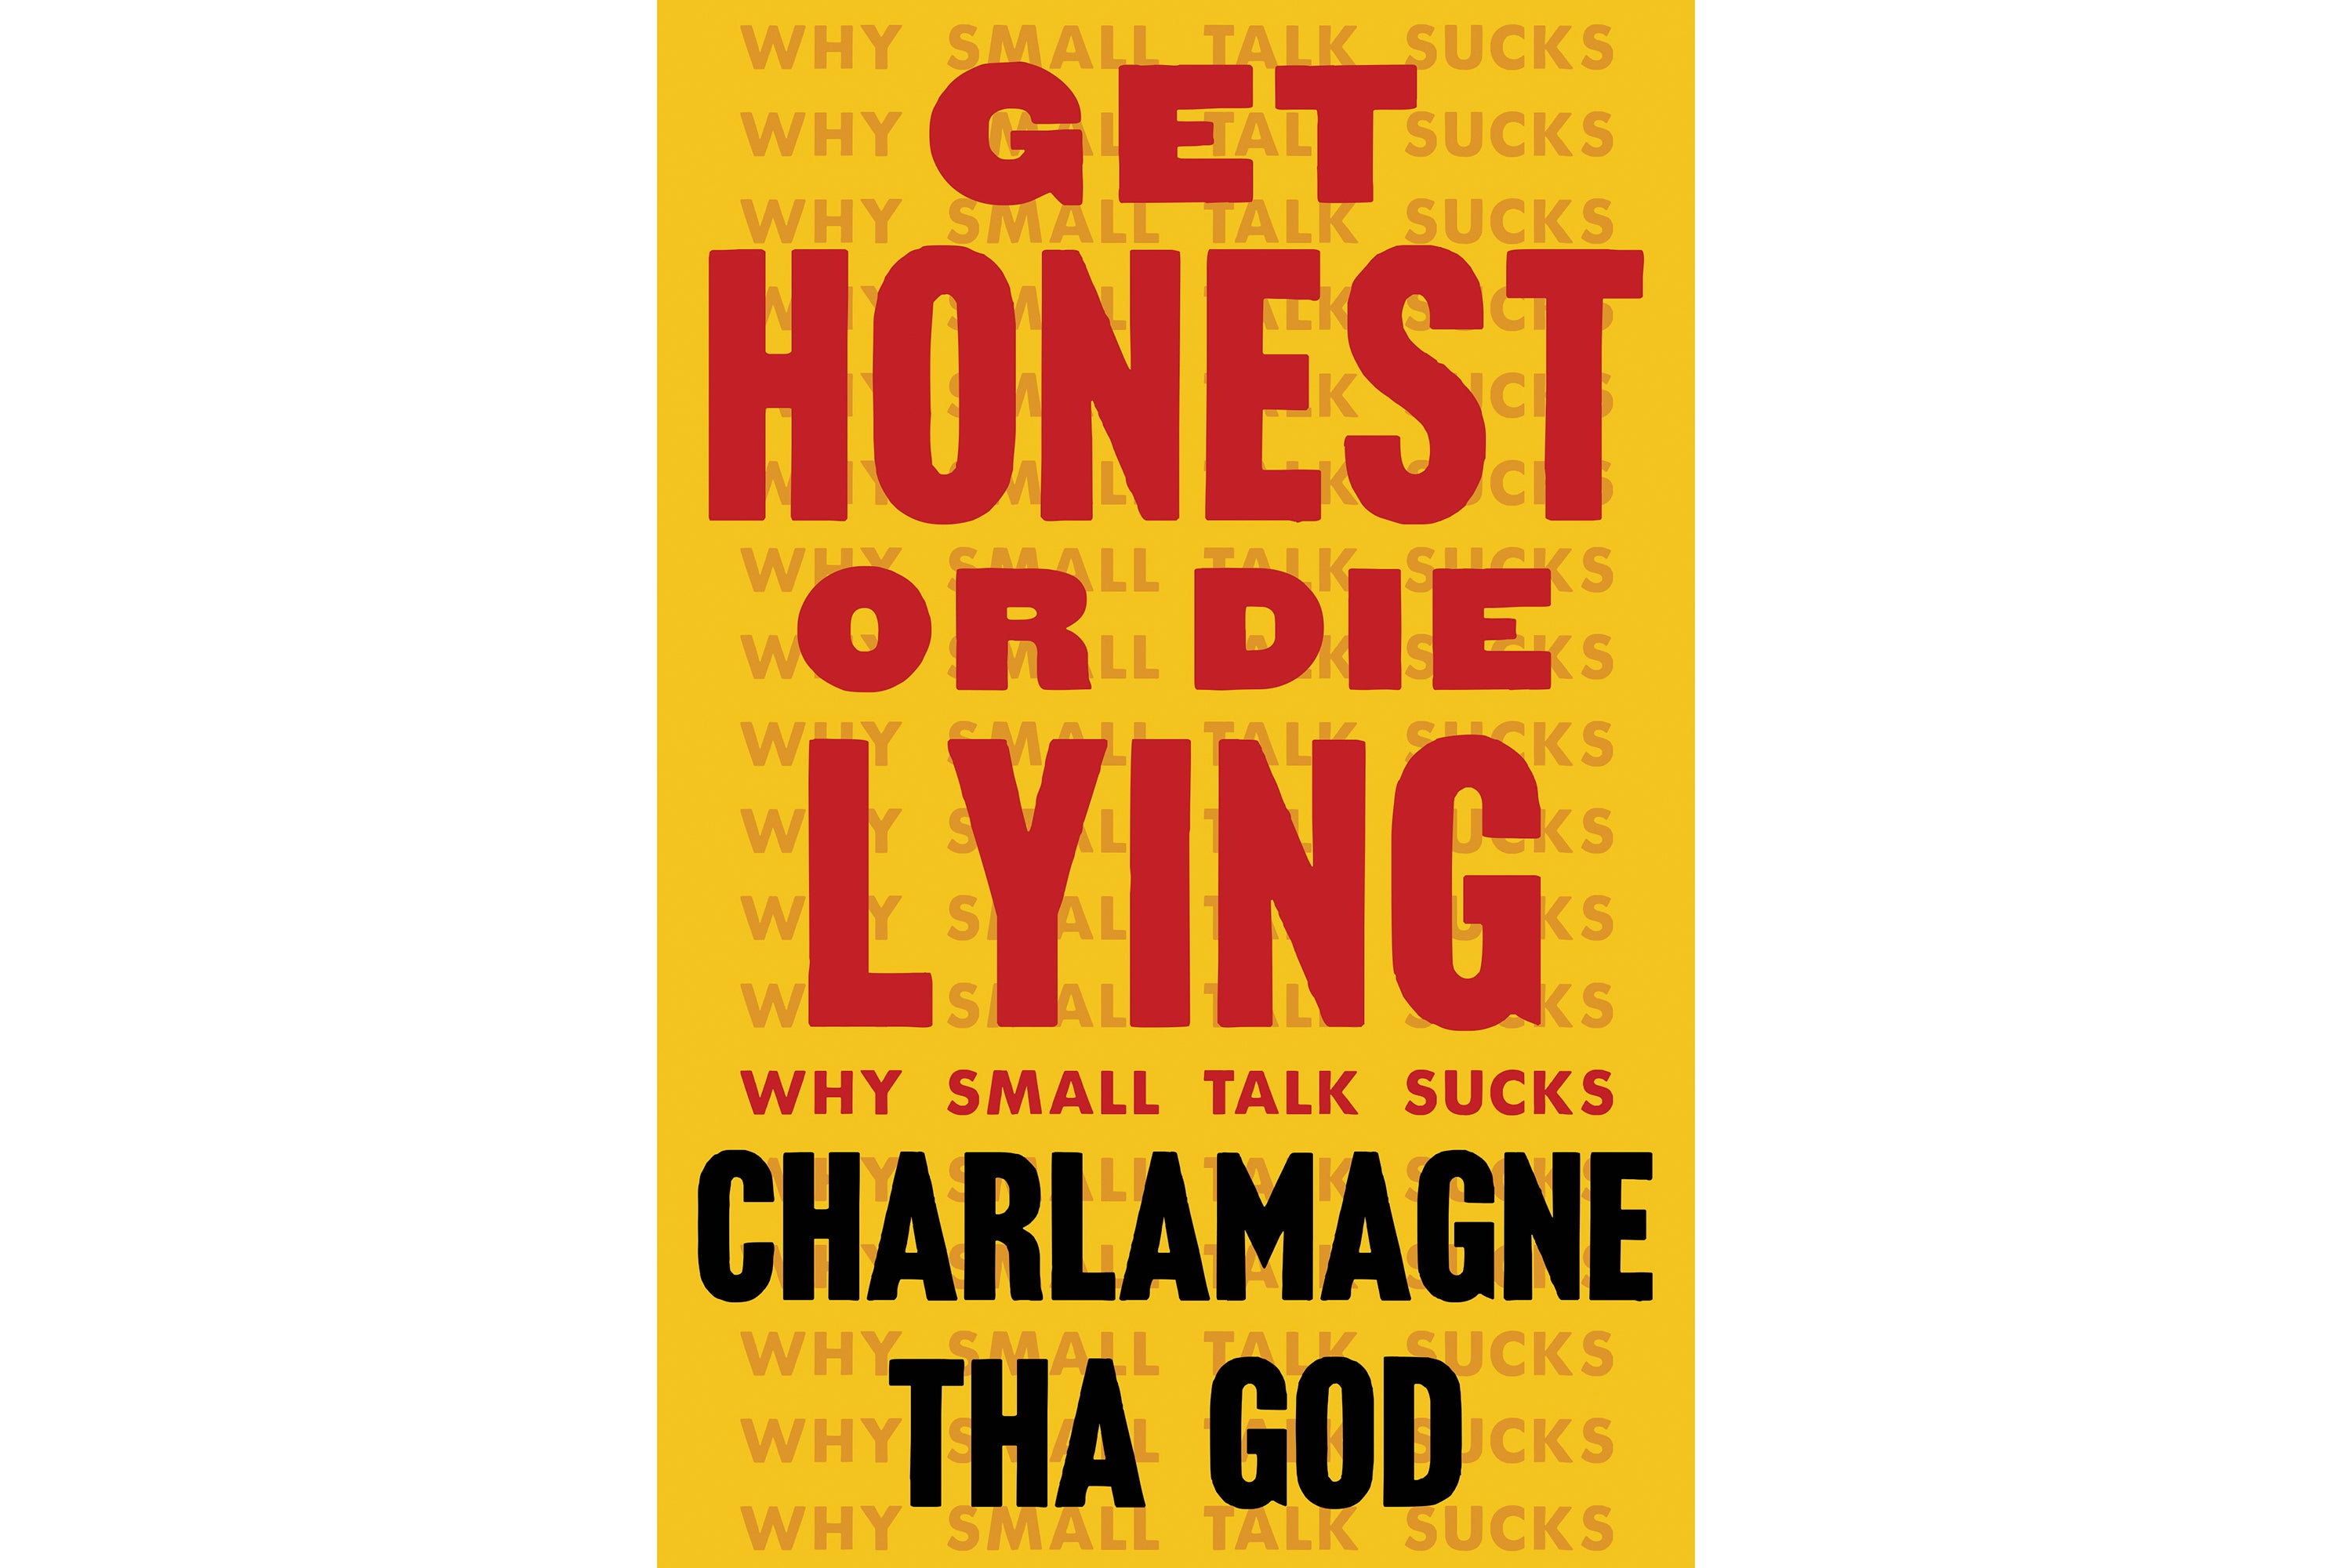 Books - Charlamagne Tha God